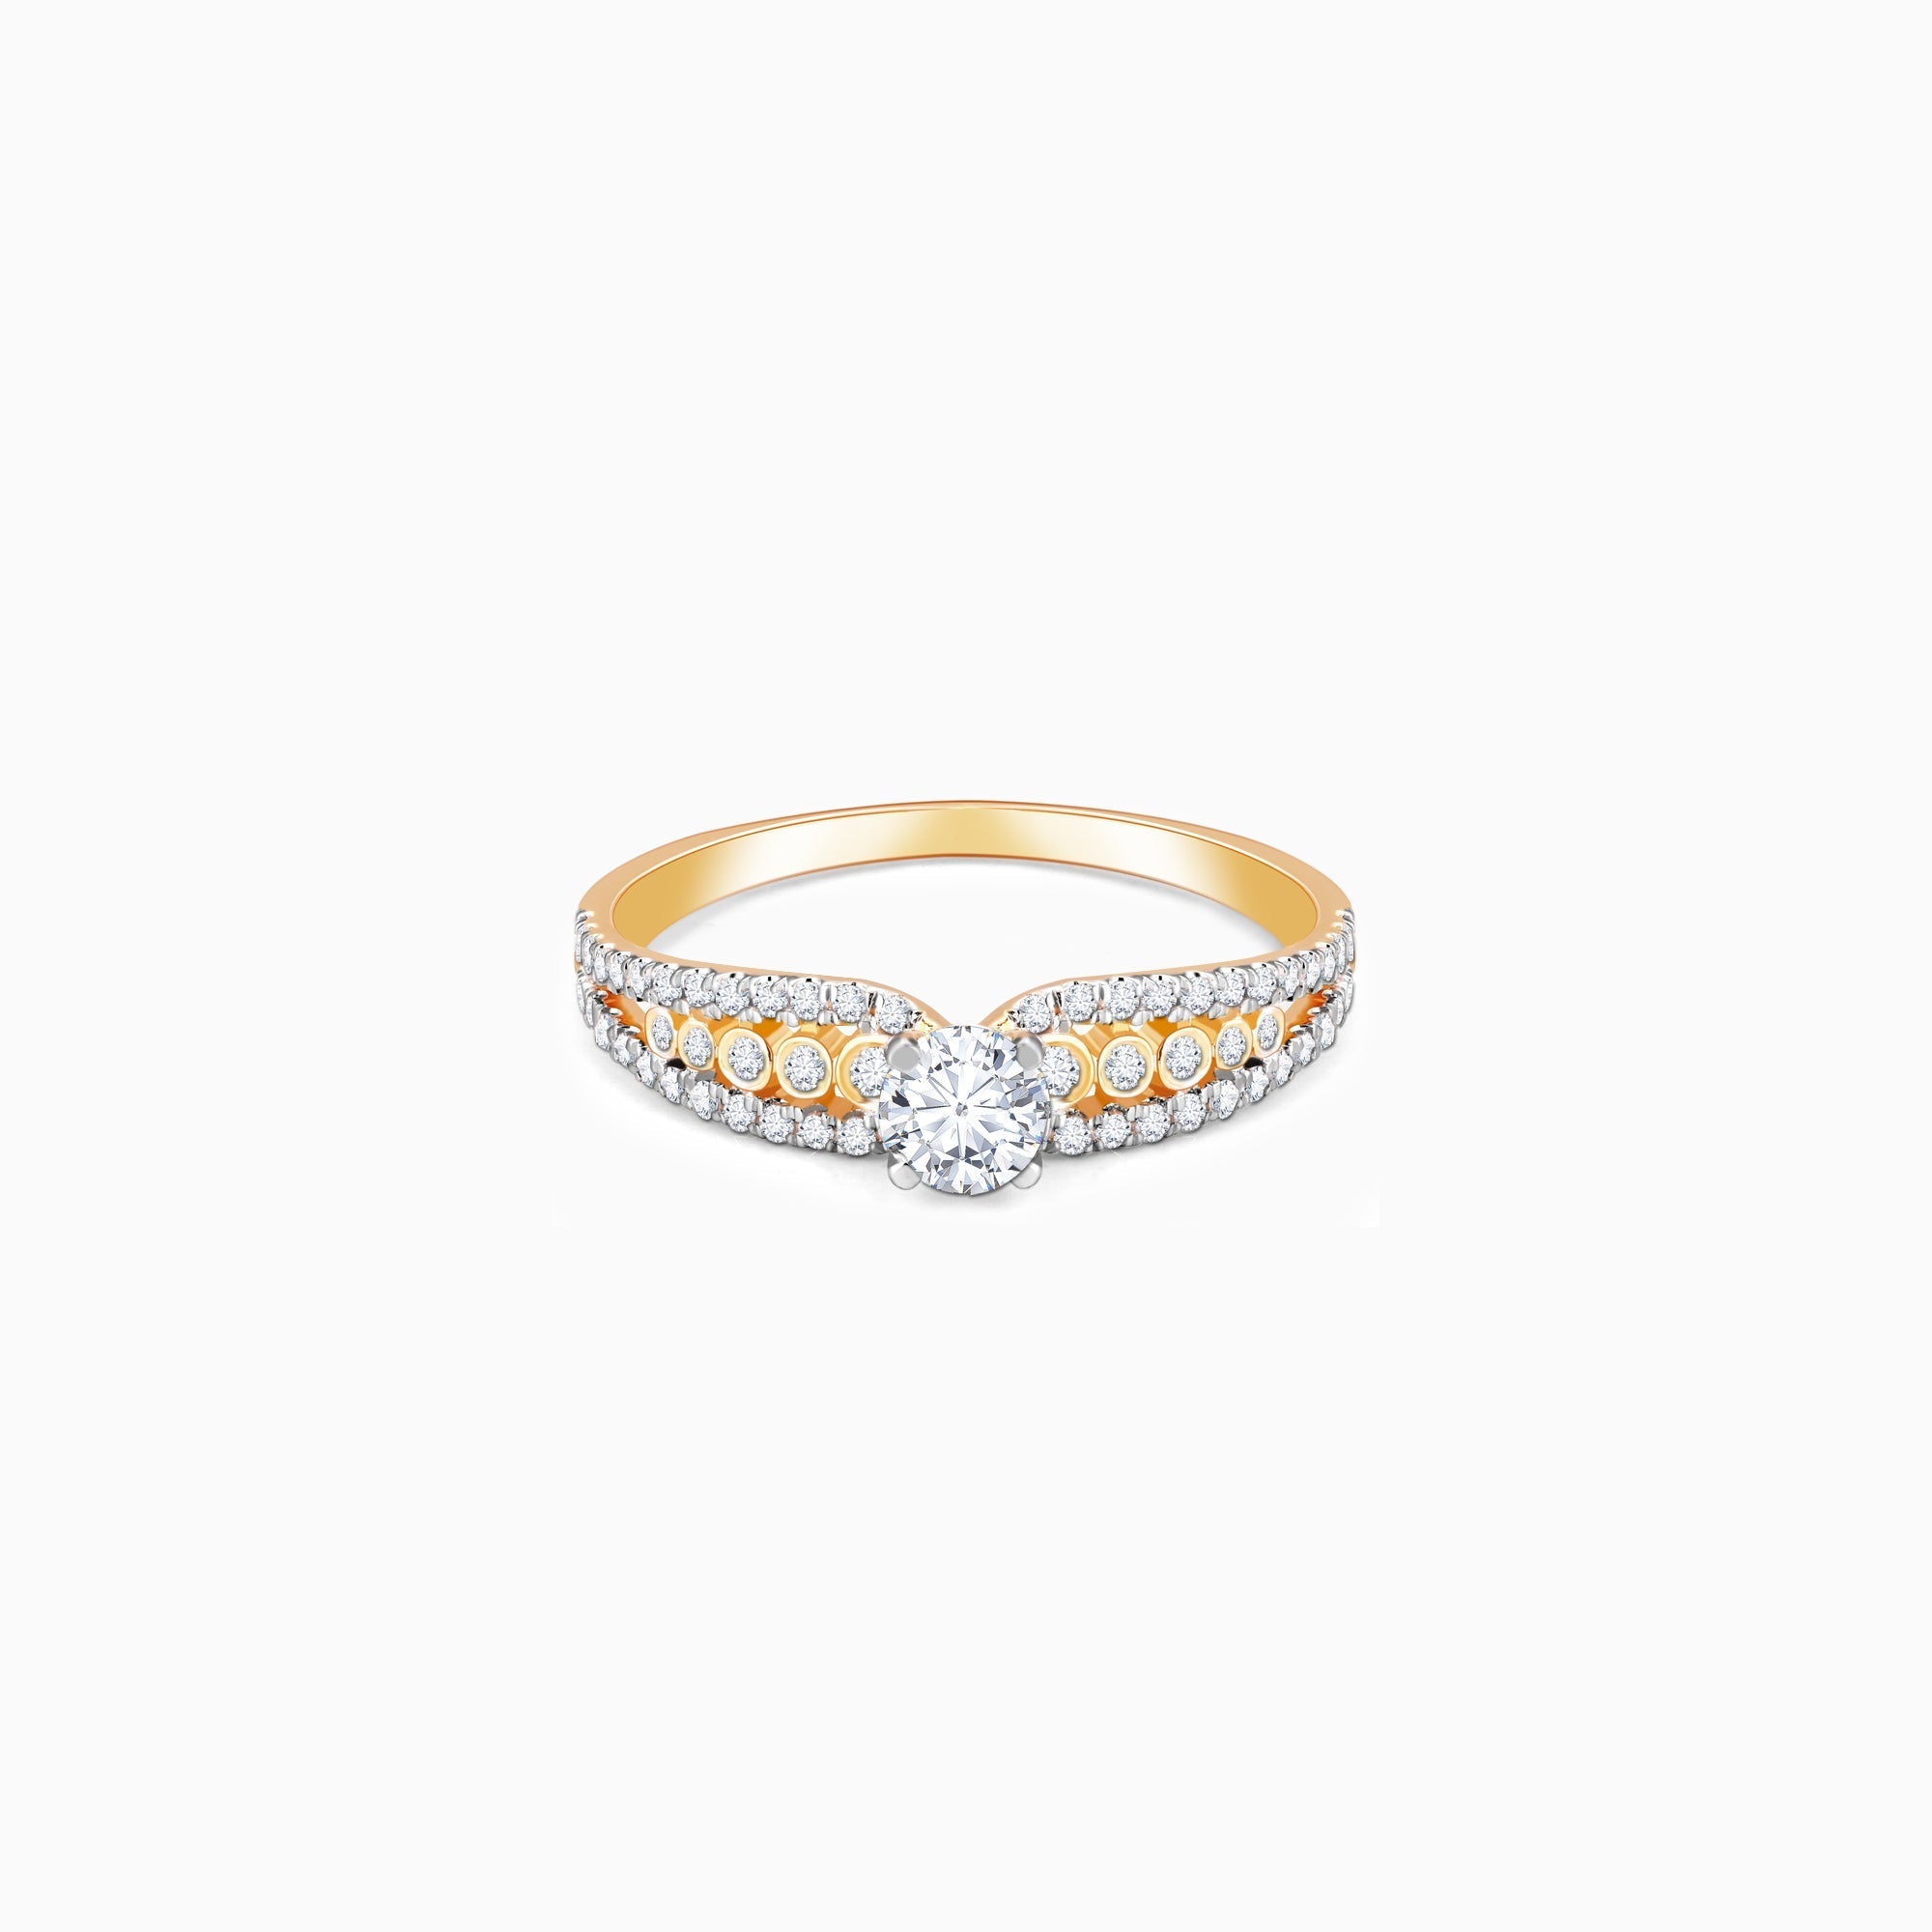 Buy Gold Rings: Stylish & Simple Designs For Men & Women